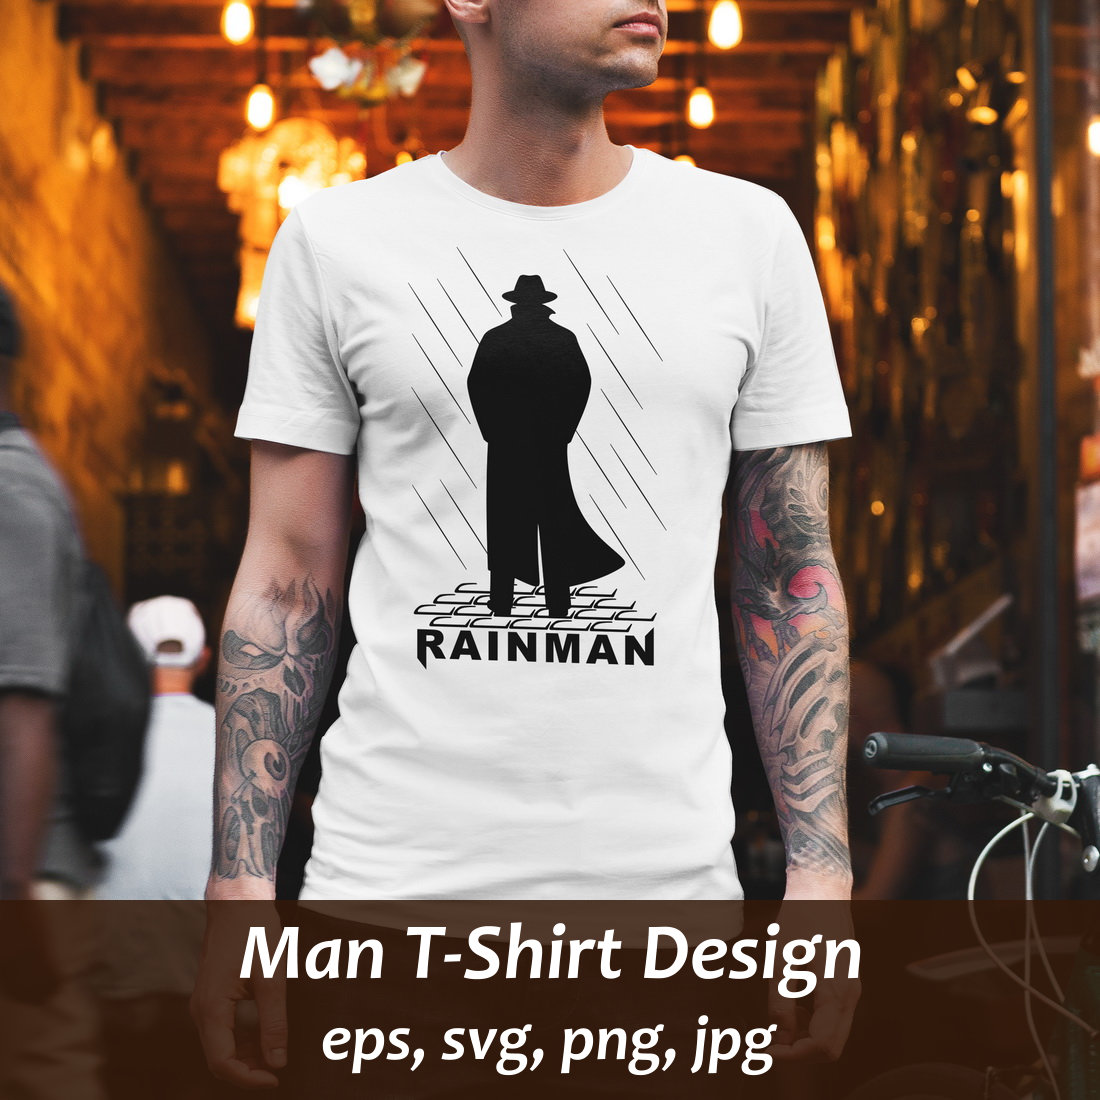 Man T-Shirt Sublimation cover image.